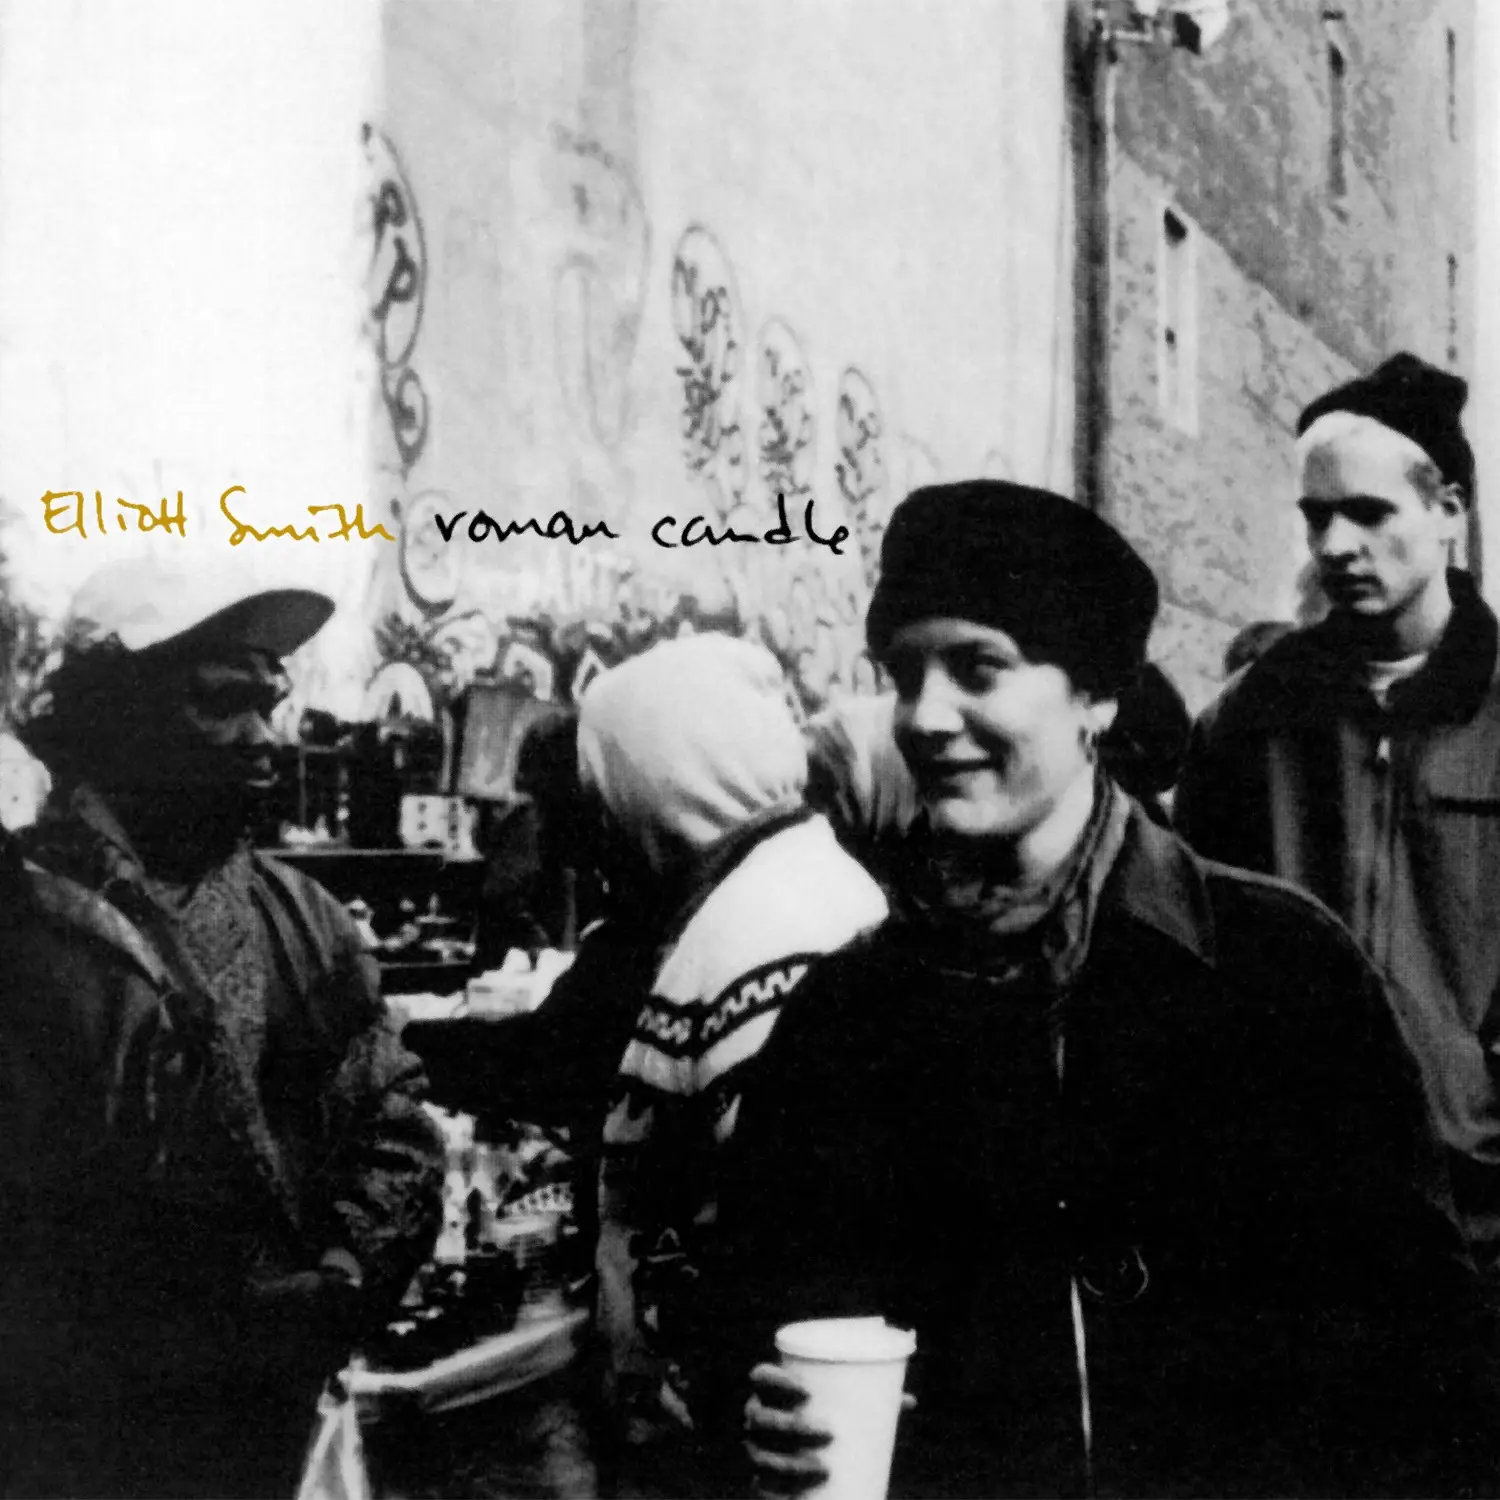 <strong>Elliott Smith - Roman Candle</strong> (Vinyl LP - gold)